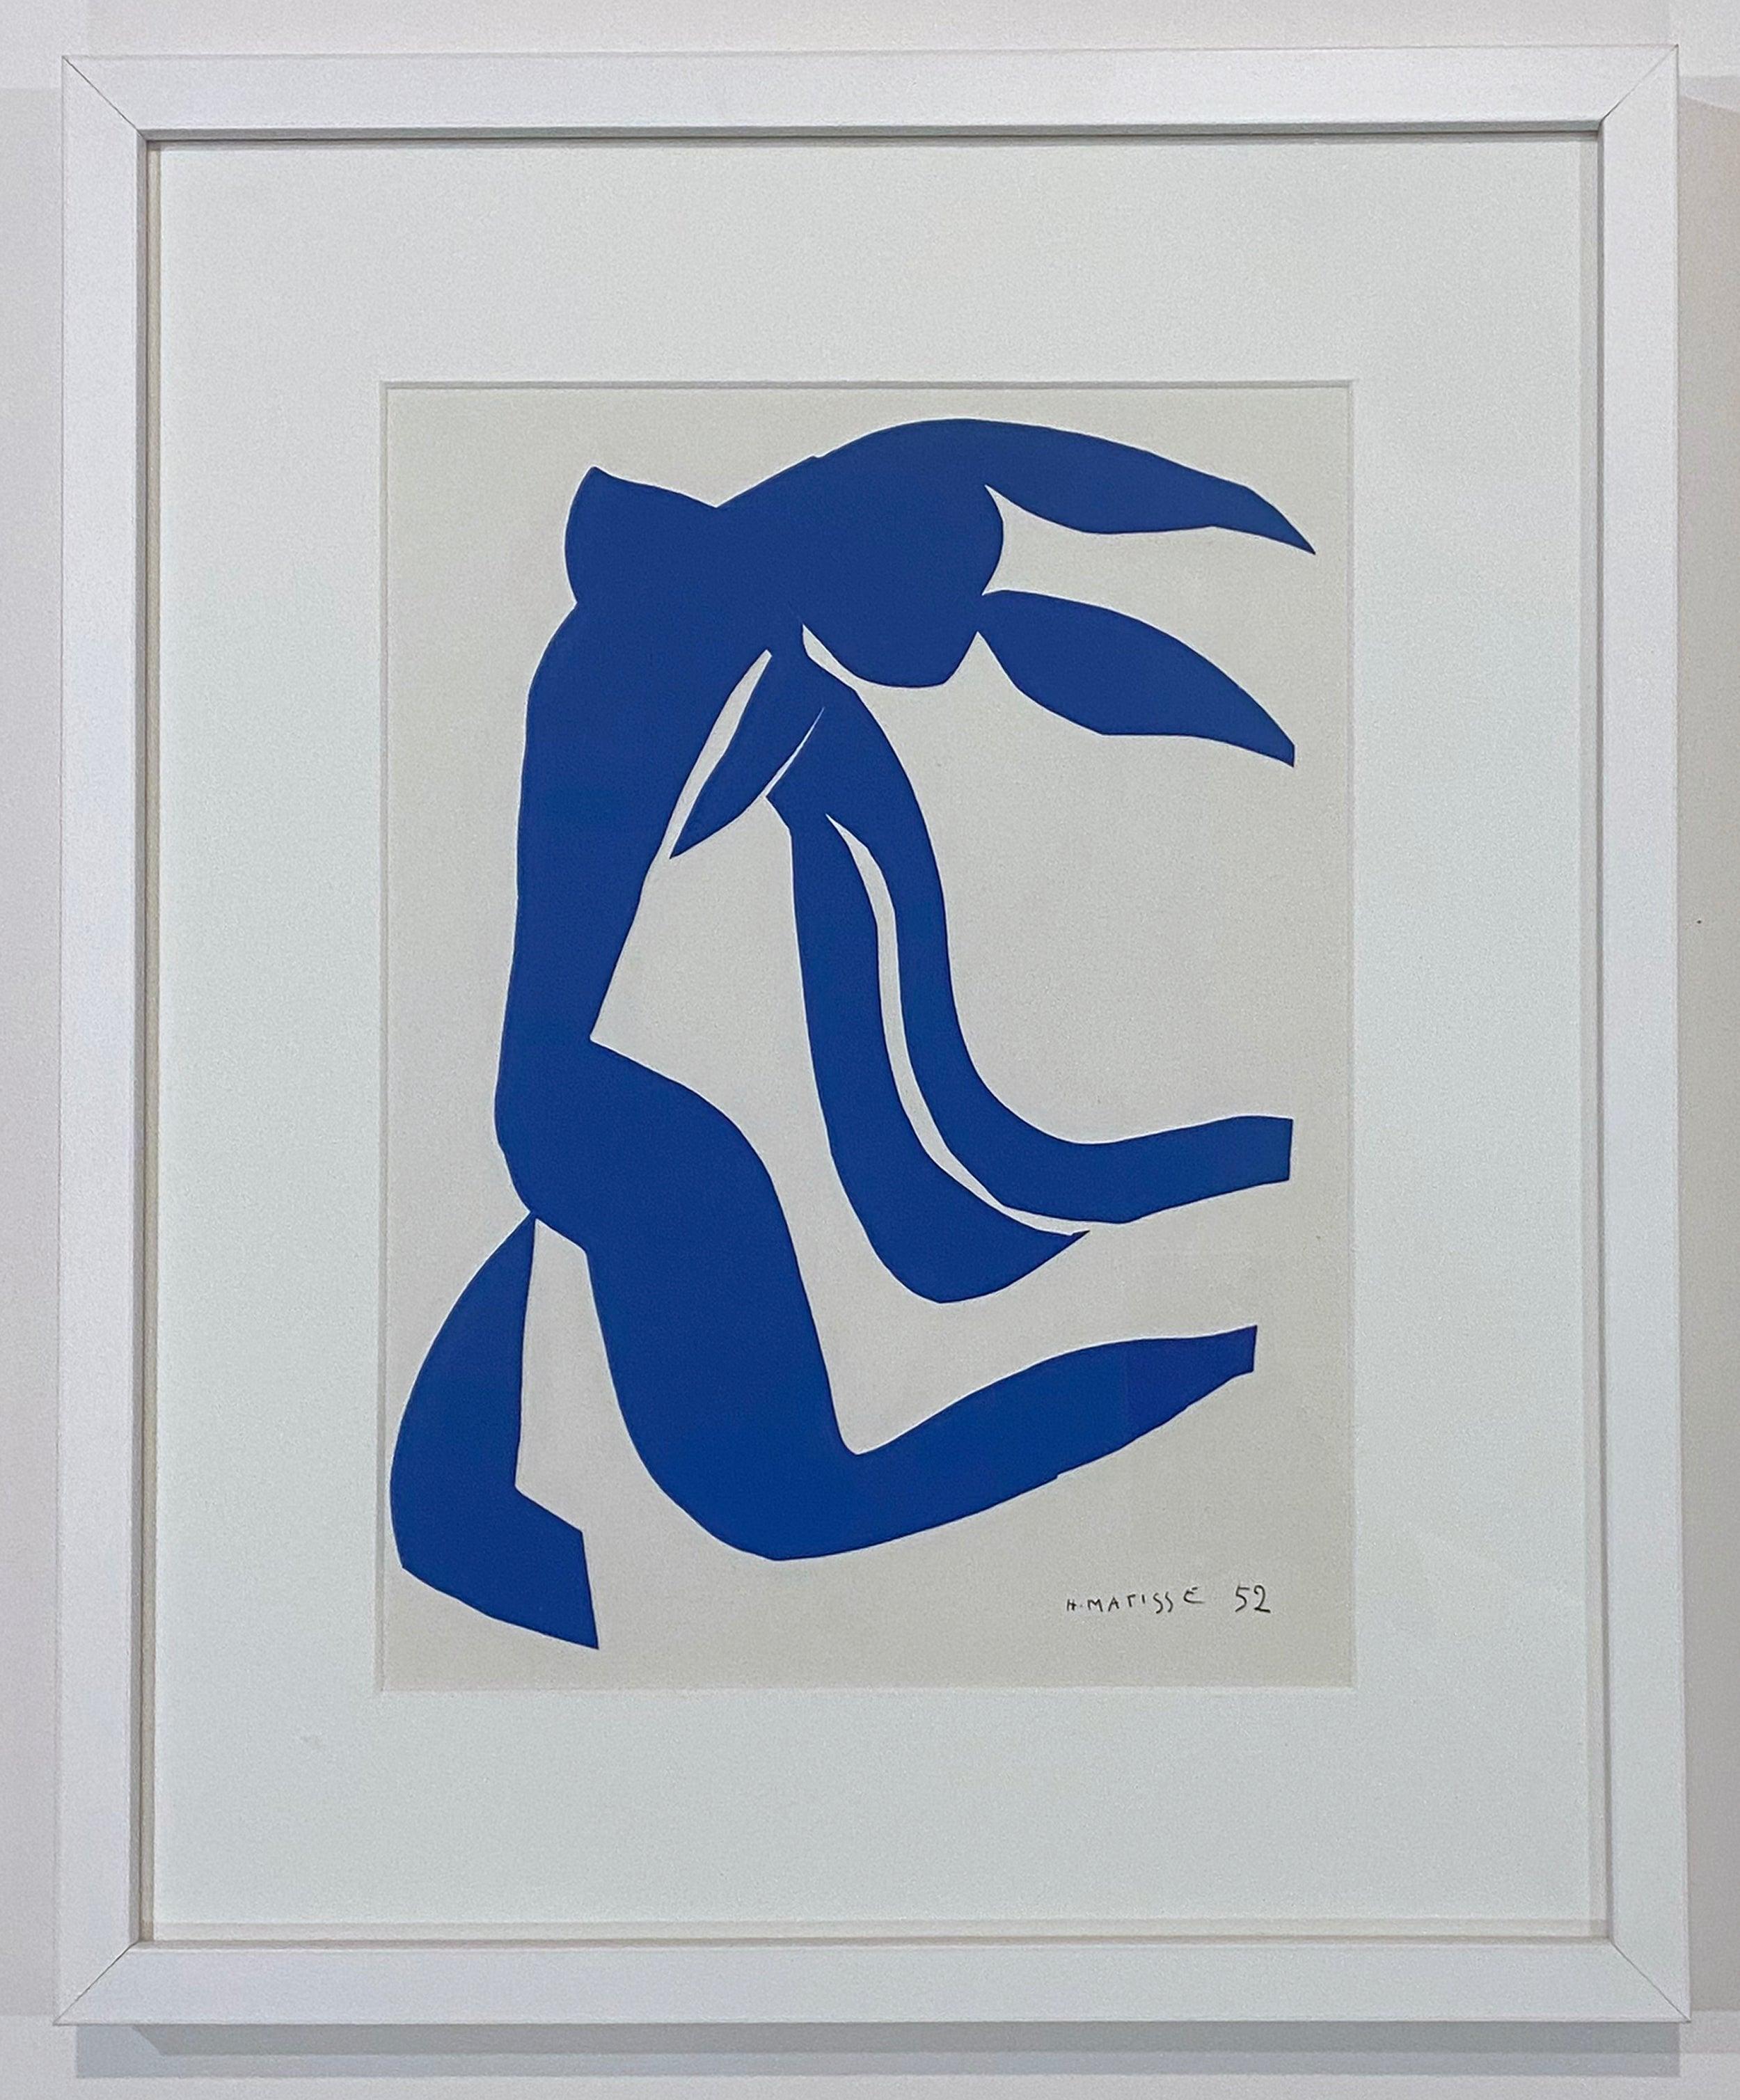 Nus Bleus VII, from 1958 The Last Works of Henri Matisse - Print by (after) Henri Matisse